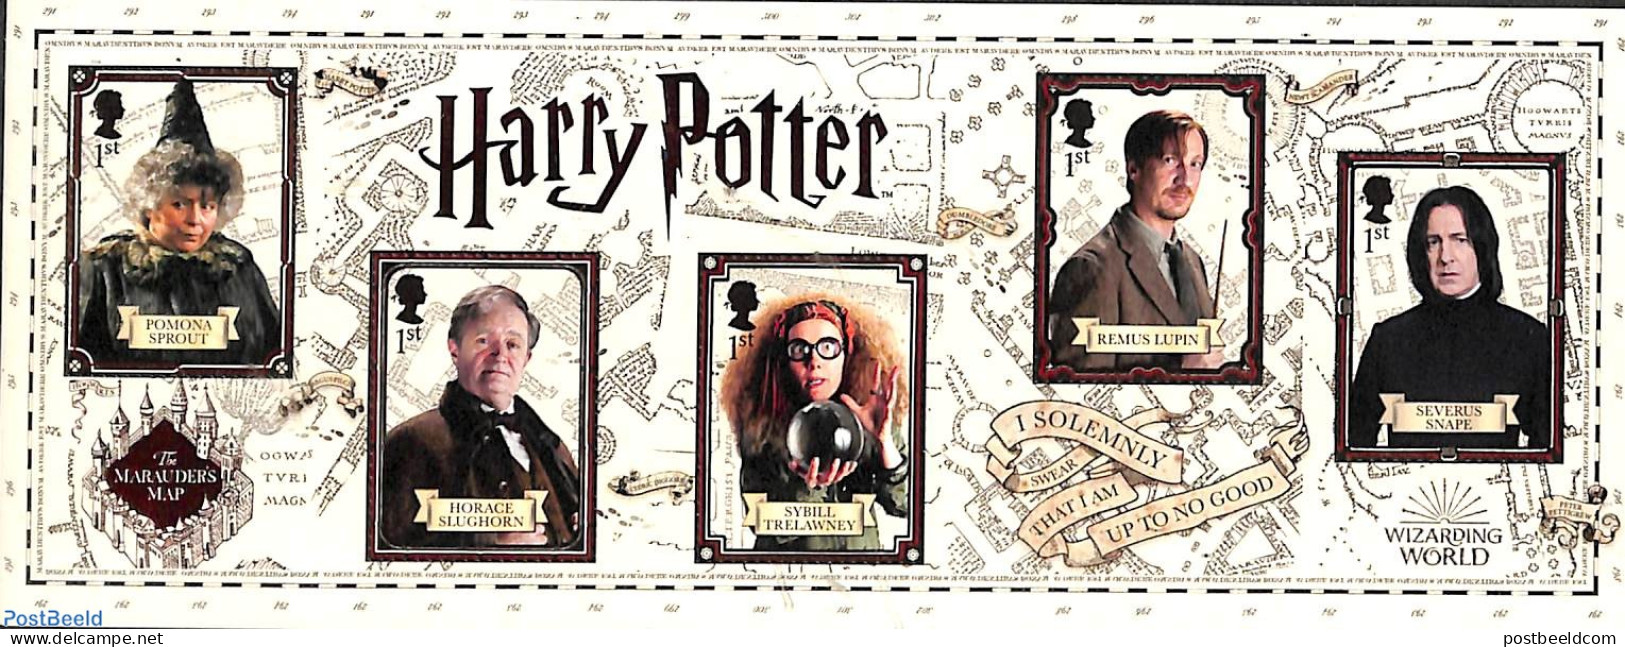 Great Britain 2018 Harry Potter 5v M/s S-a, Mint NH, Art - Children's Books Illustrations - Harry Potter - Nuevos